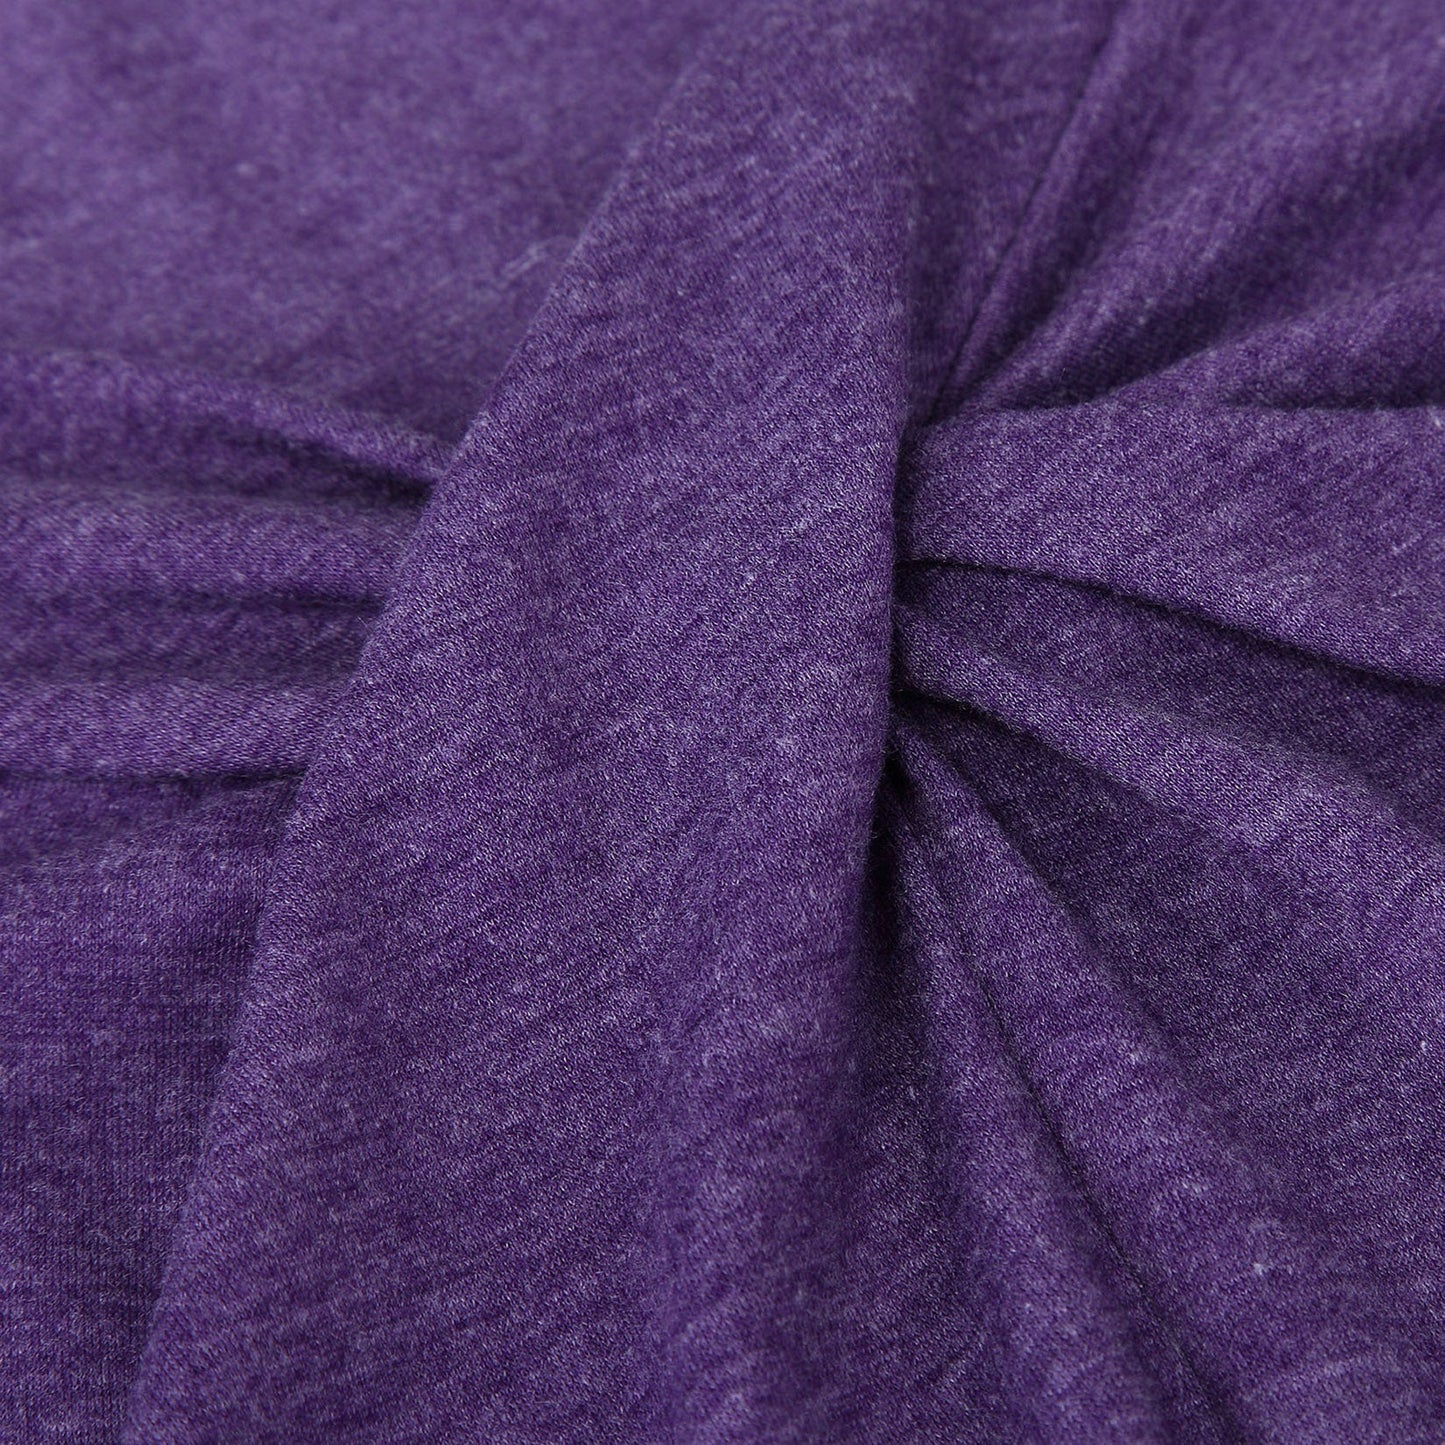 CLEARLOVE knot hem tops for women V Neck Blouse Purple